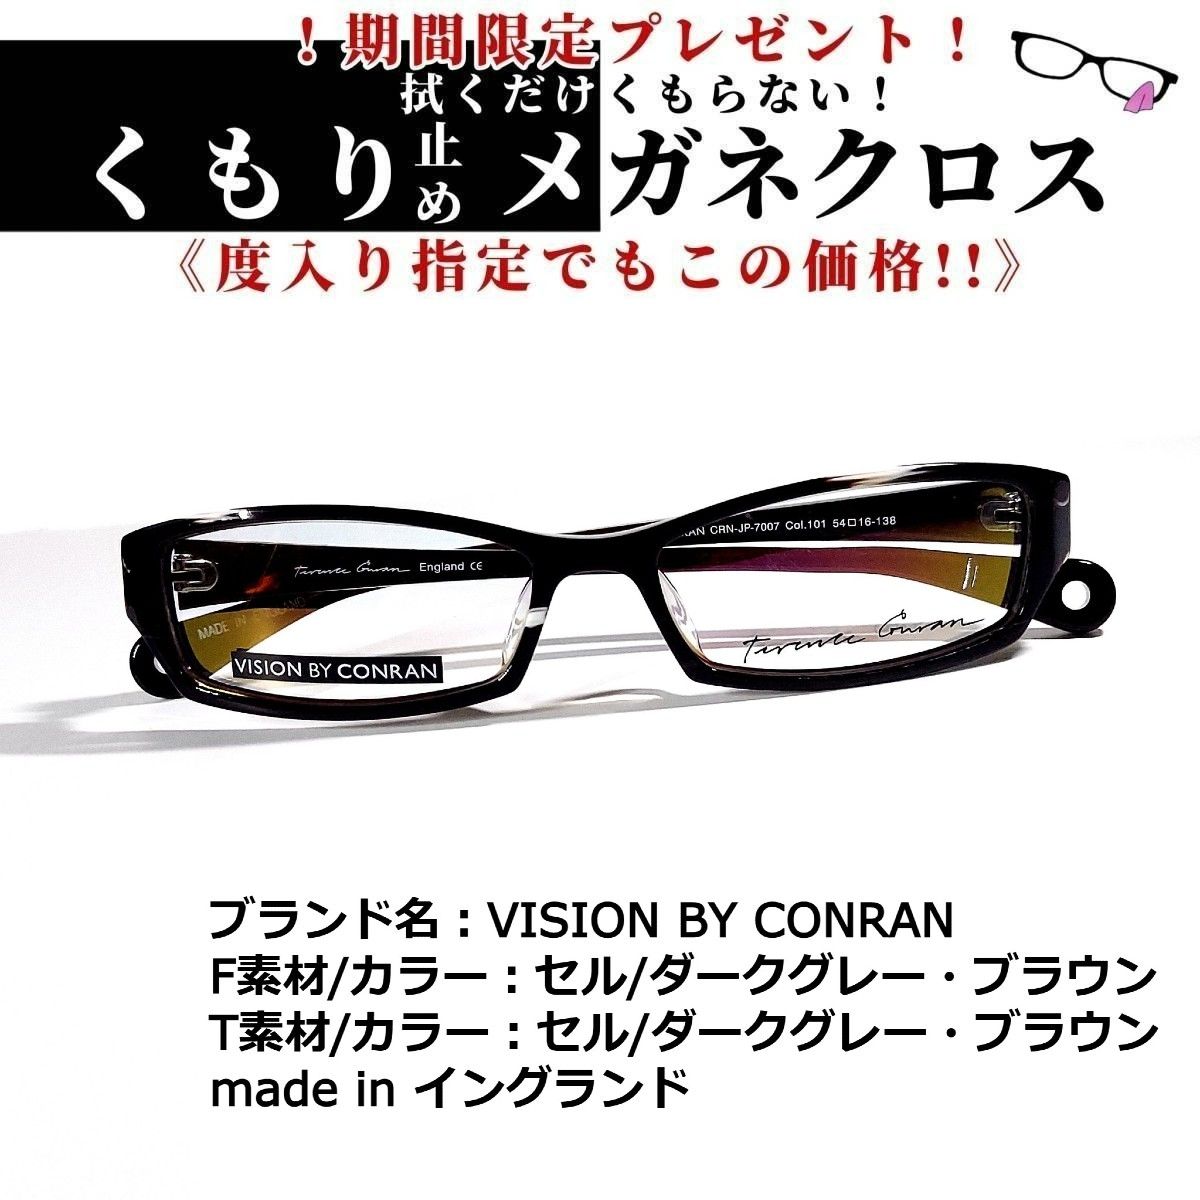 No.2094-メガネ VISION BY CONRAN【フレームのみ価格】-